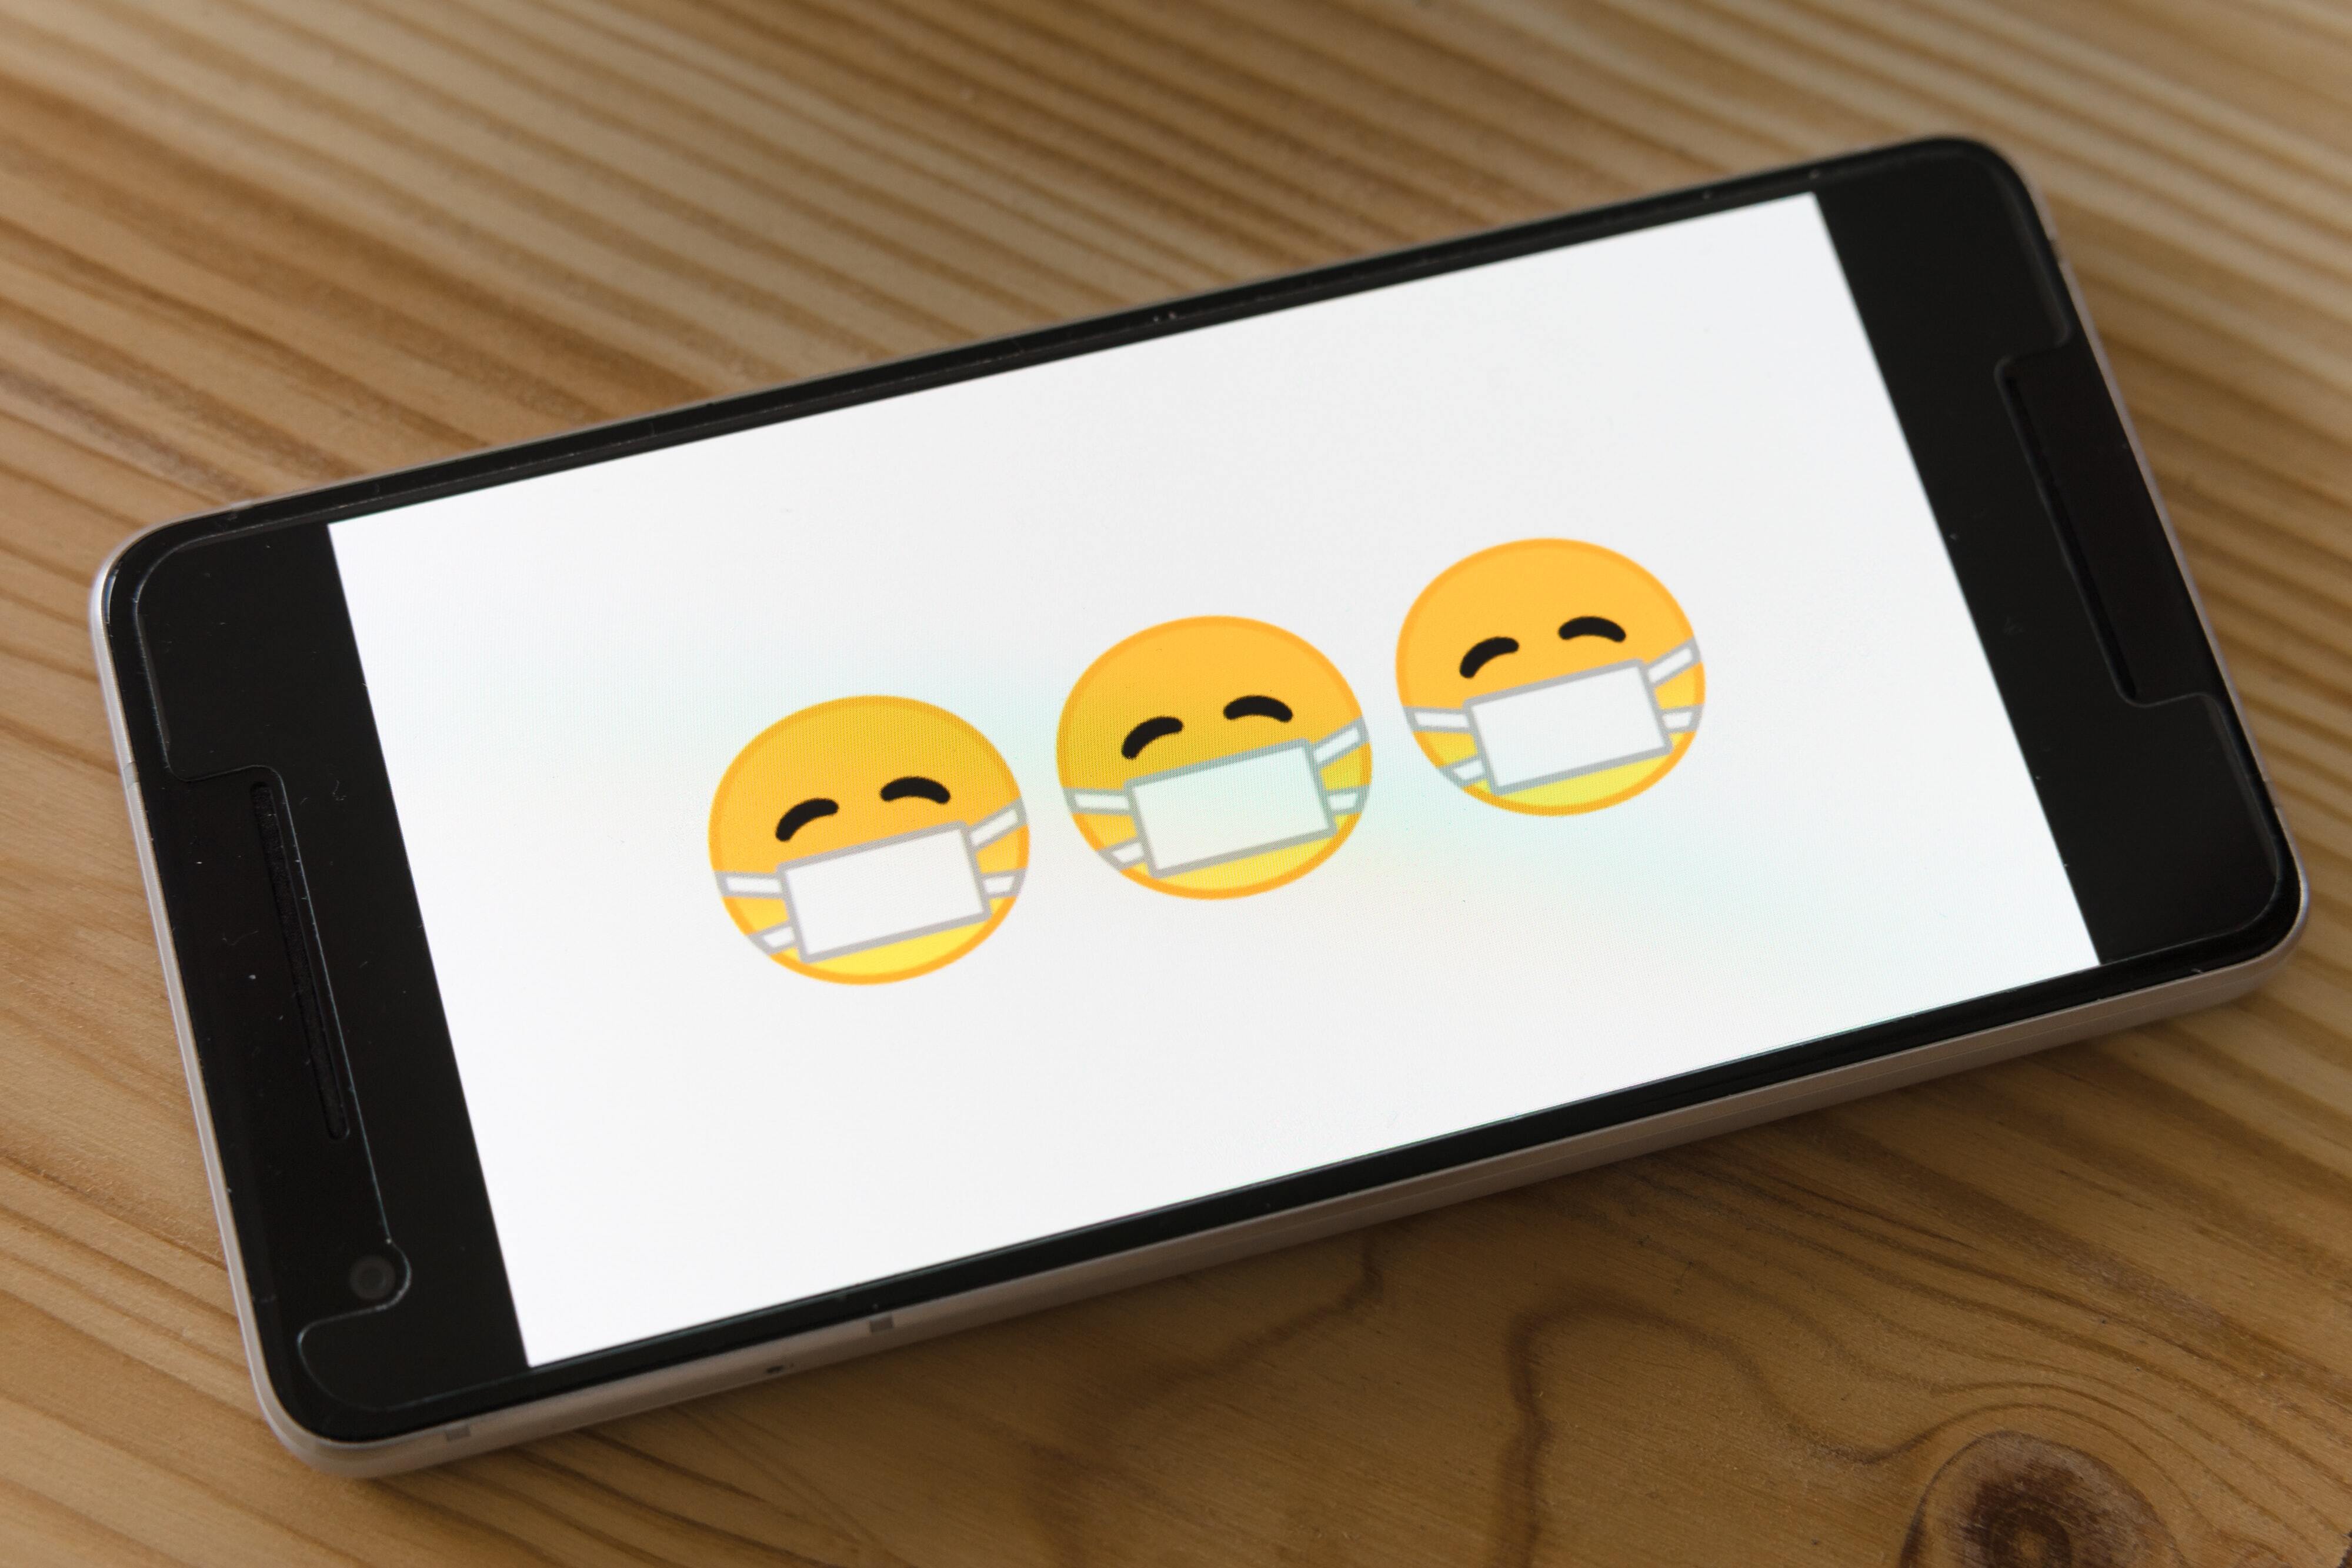 Phone with mask emojis